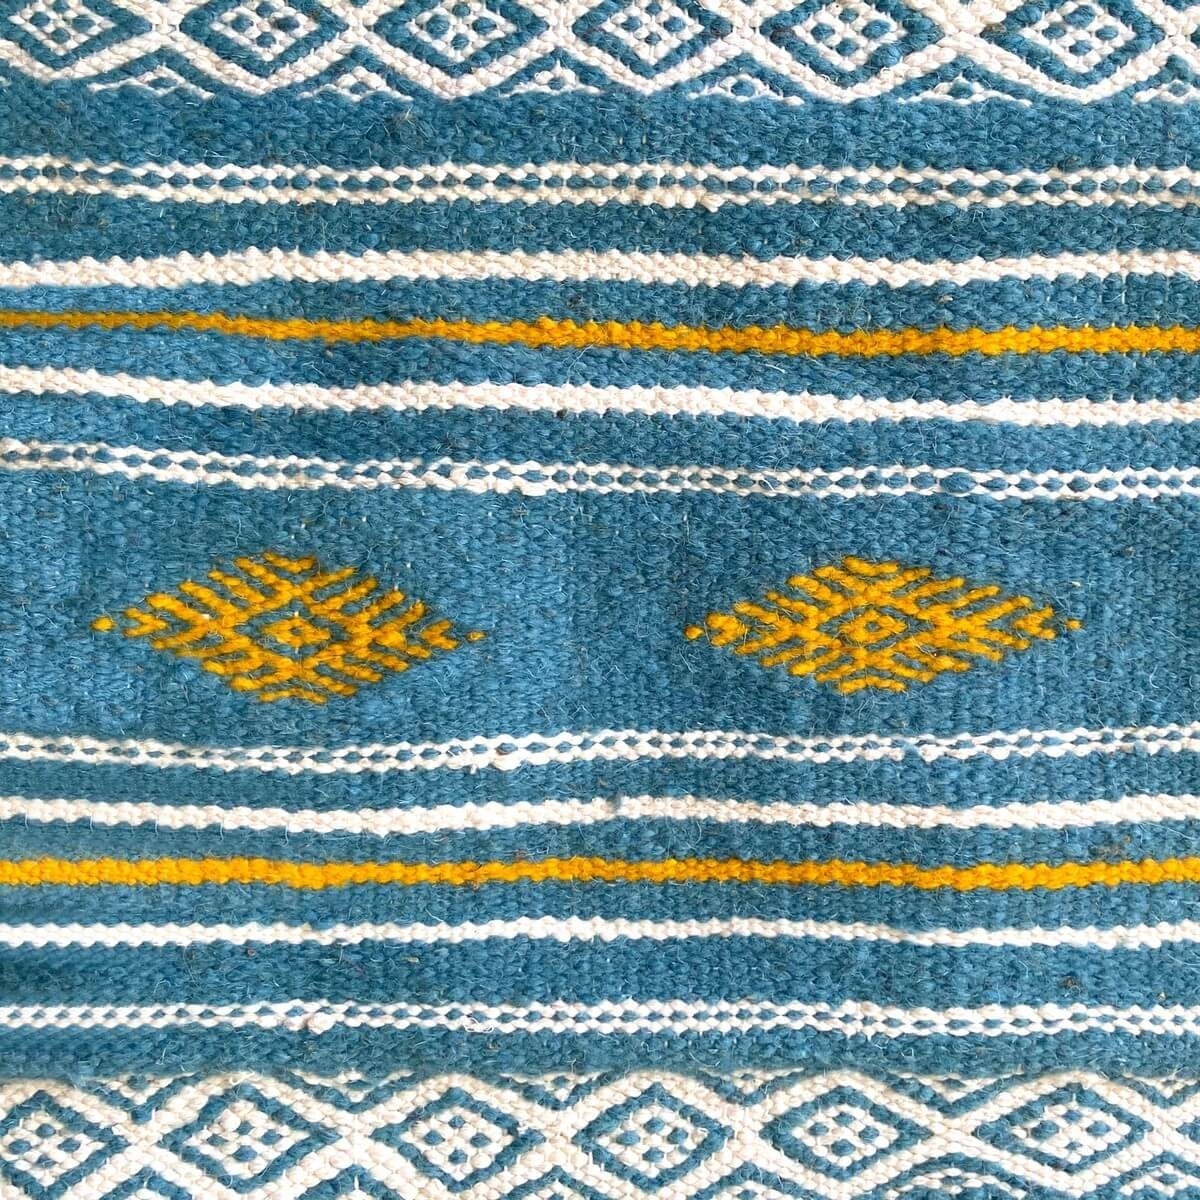 Tapete berbere Tapete Kilim Oued Zitoun 136x244 Turquesa/Amarelo/Vermelho (Tecidos à mão, Lã) Tapete tunisiano kilim, estilo mar